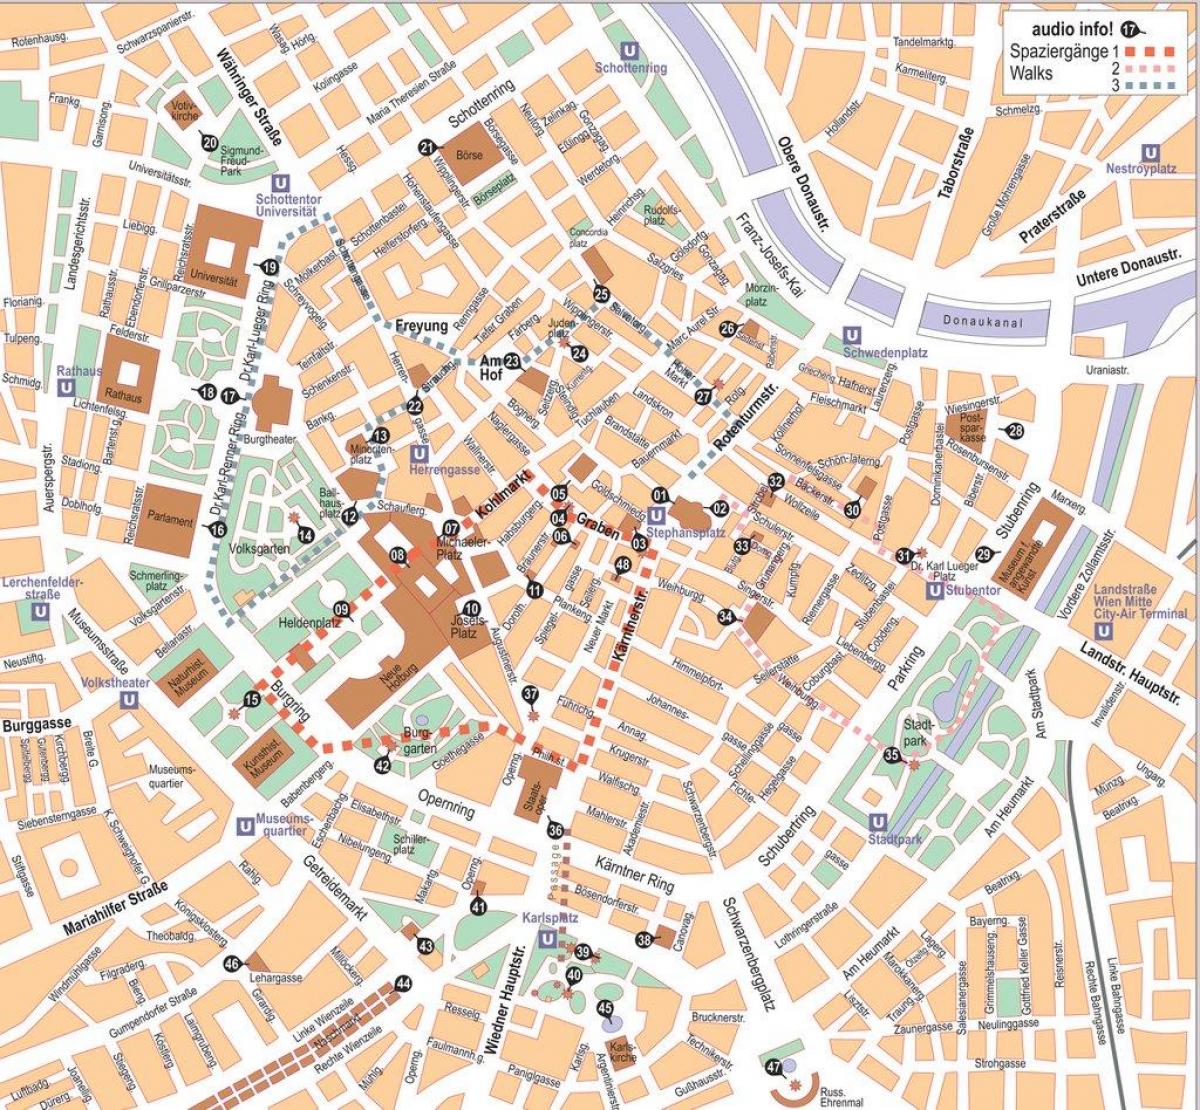 Wien, Østerrike city center kart